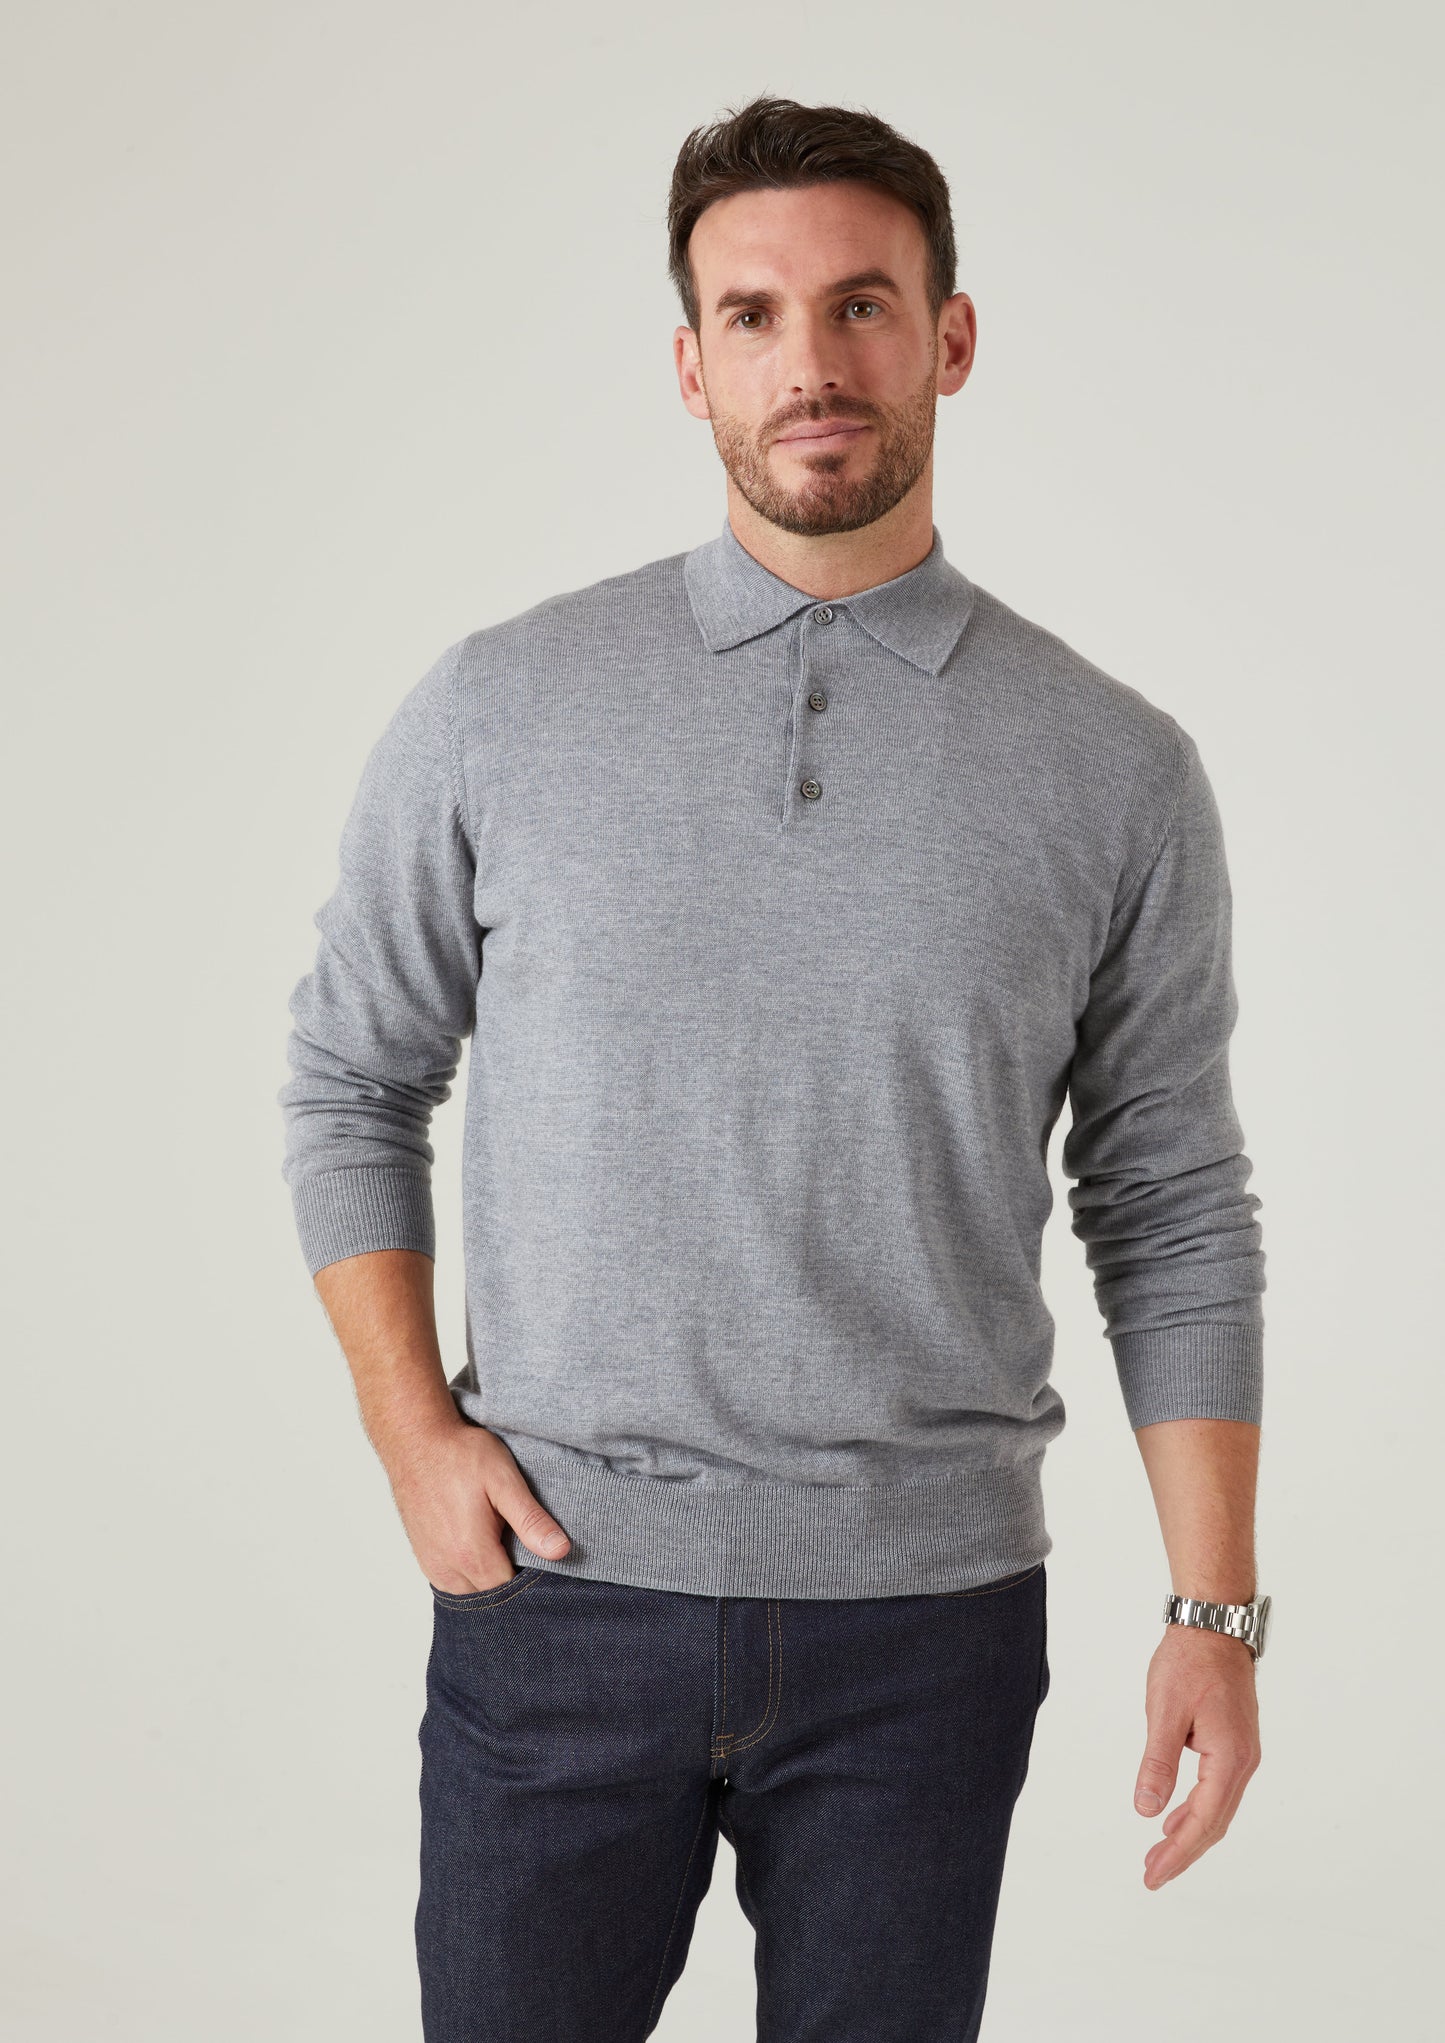 Hindhead Men's Merino Wool Polo Shirt in Light Grey Mix